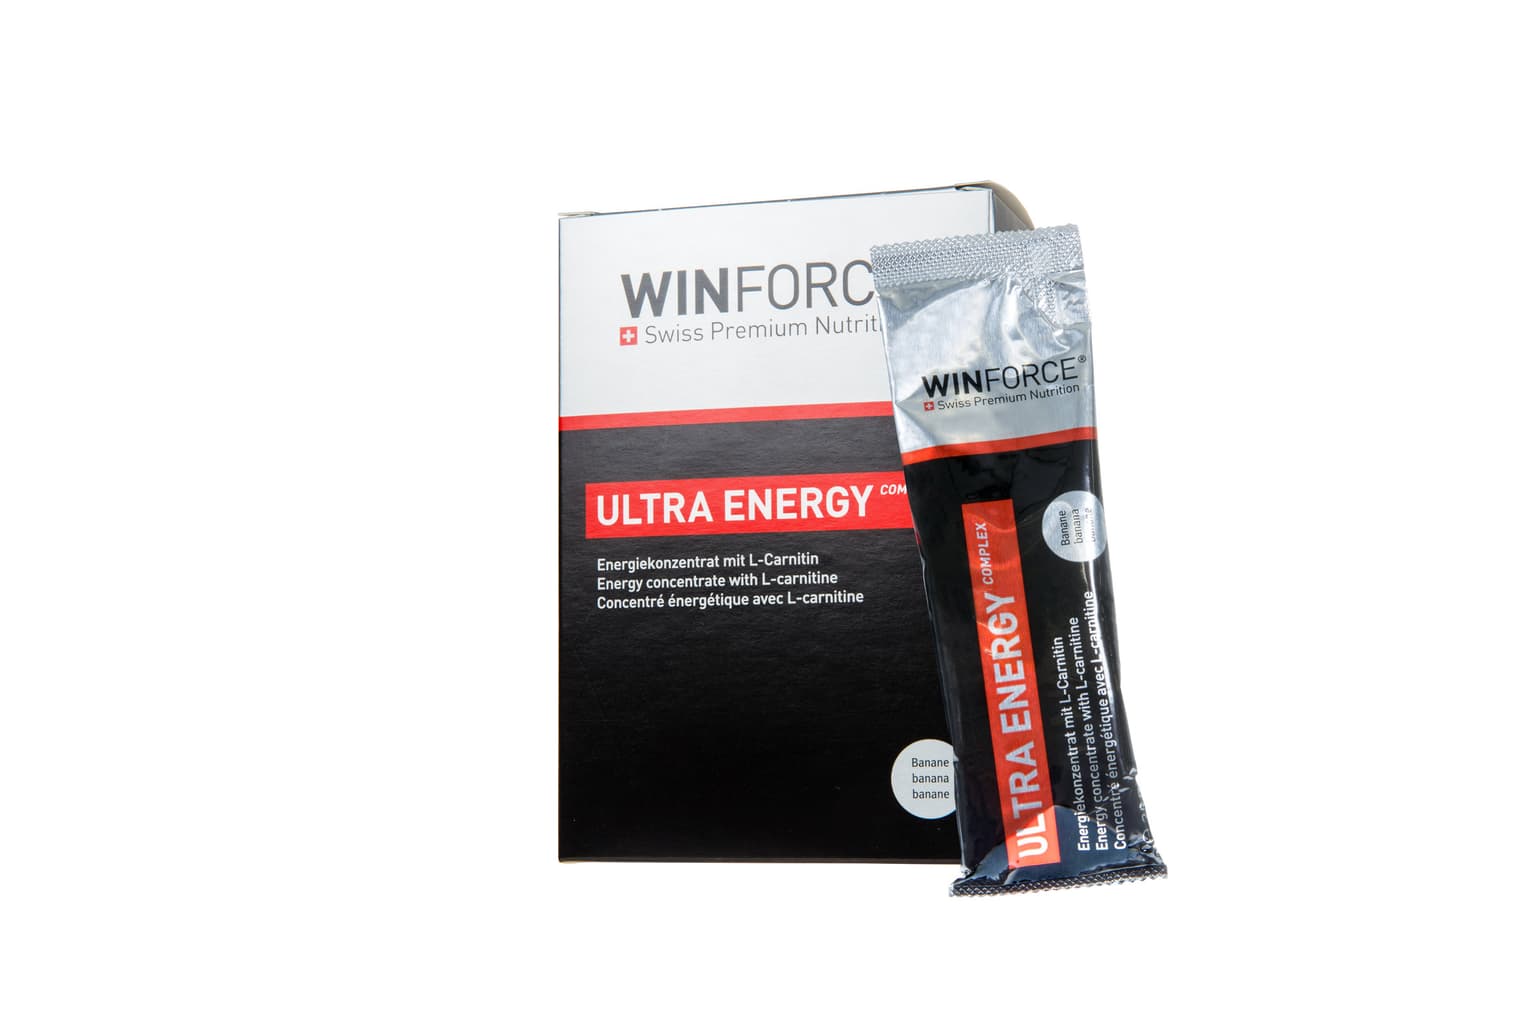 Winforce Winforce Ultra Energy Complex Gel policromo 1